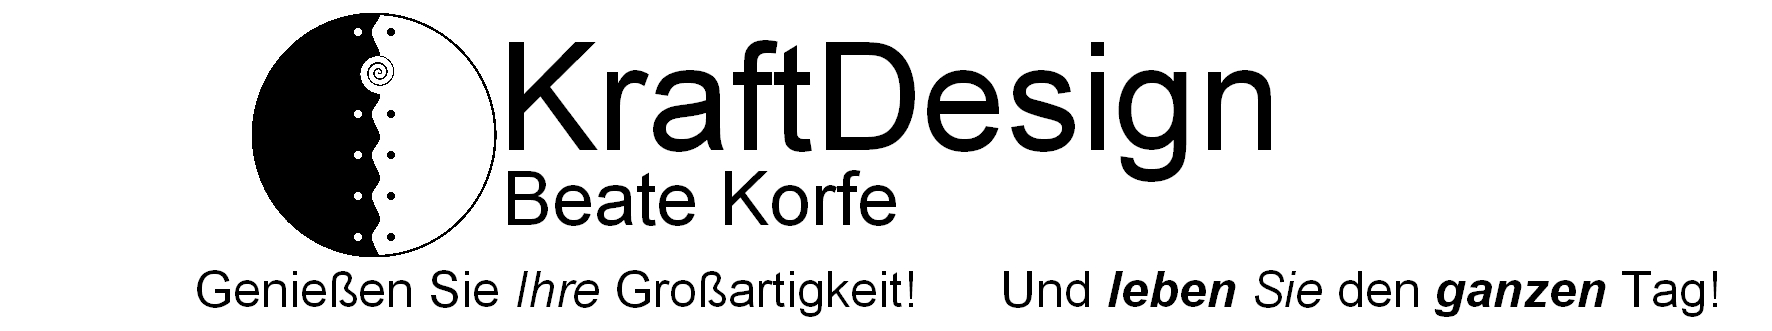 Kraftdesign Logo